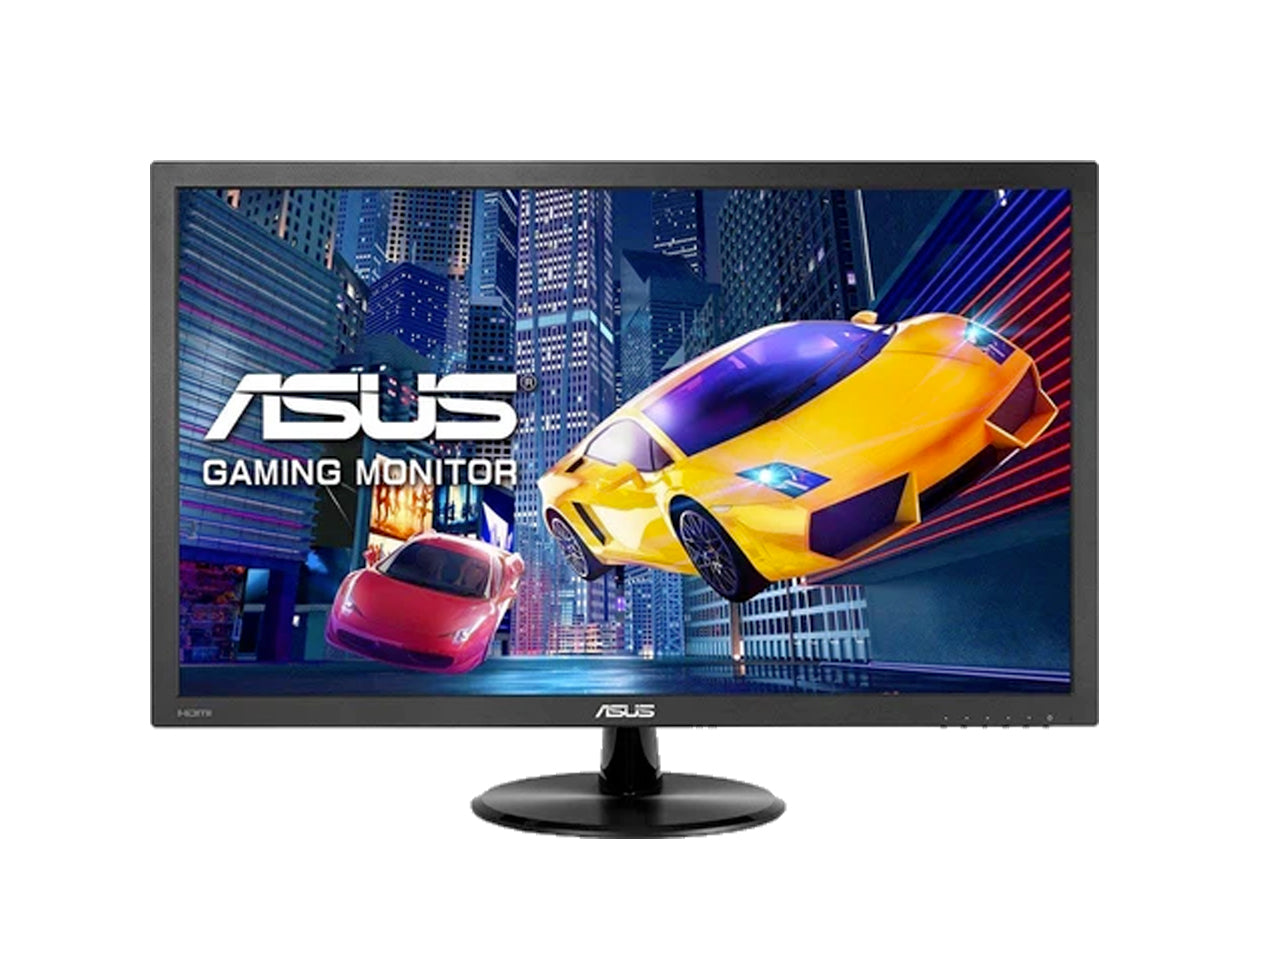 ASUS VP228H 21.5-inch Gaming LCD Monitor